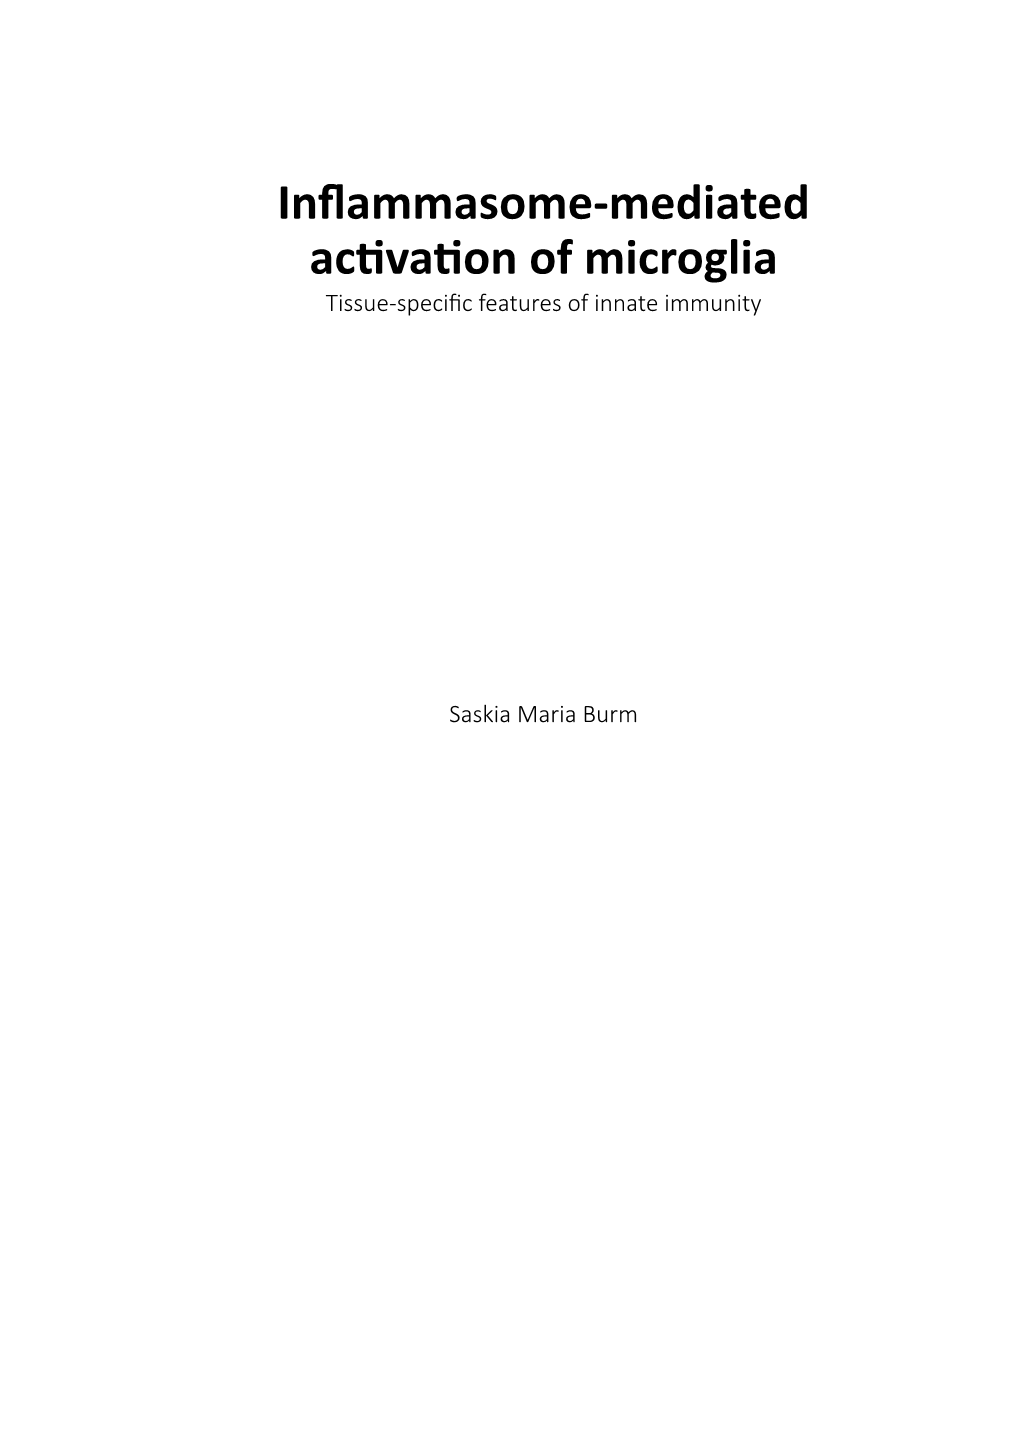 Inflammasome-Mediated Activation of Microglia Tissue-Specific Features of Innate Immunity